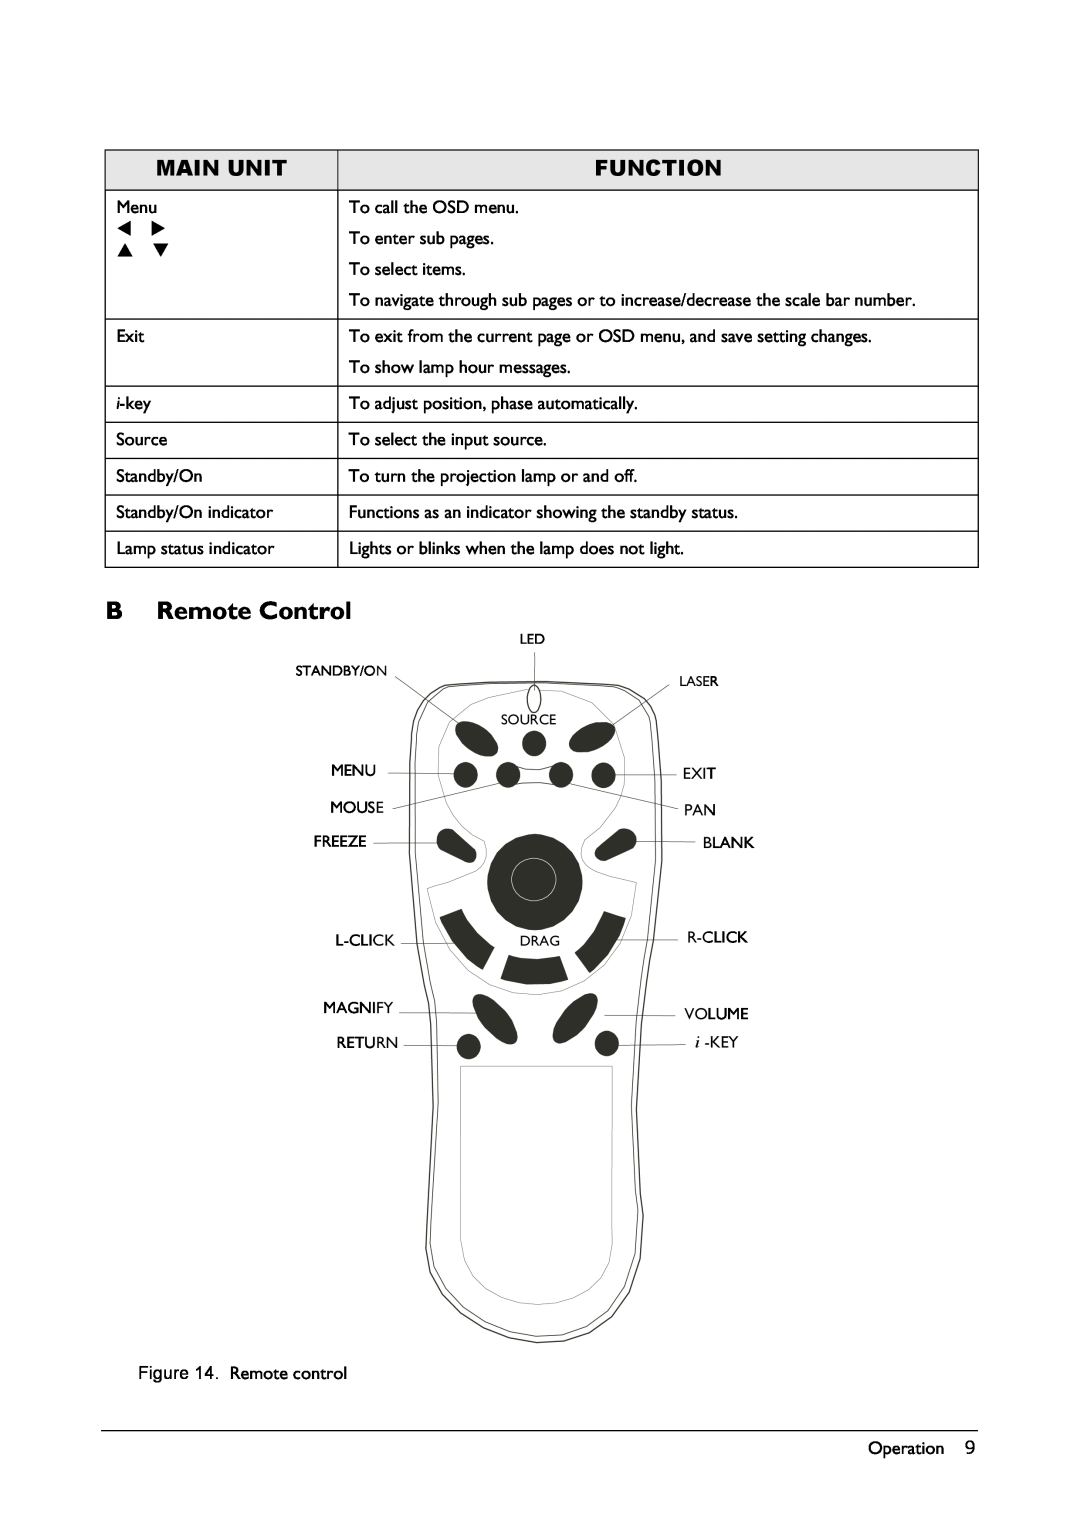 BenQ VP150X manual B Remote Control, Main Unit, Function 